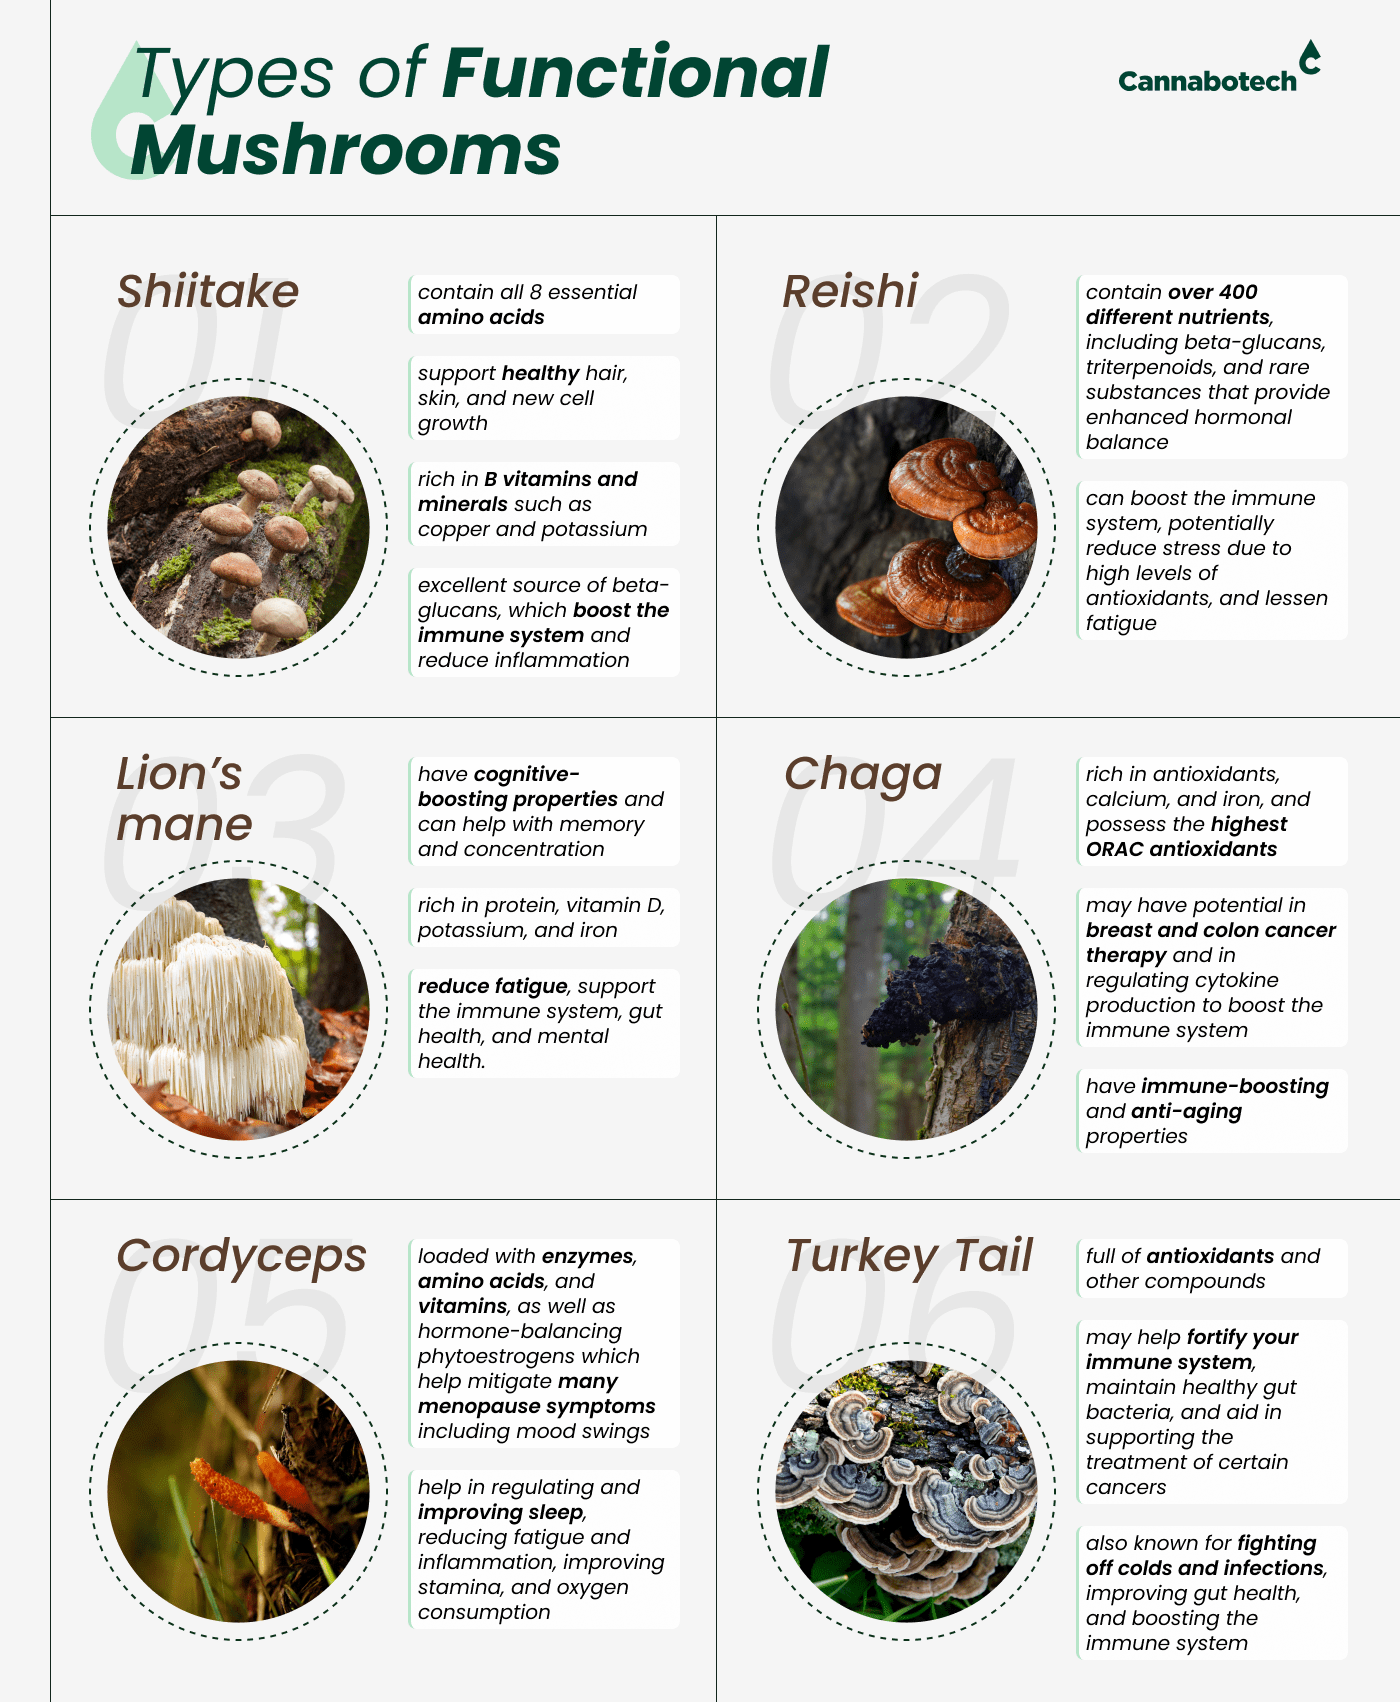 Types of Functional Mushrooms